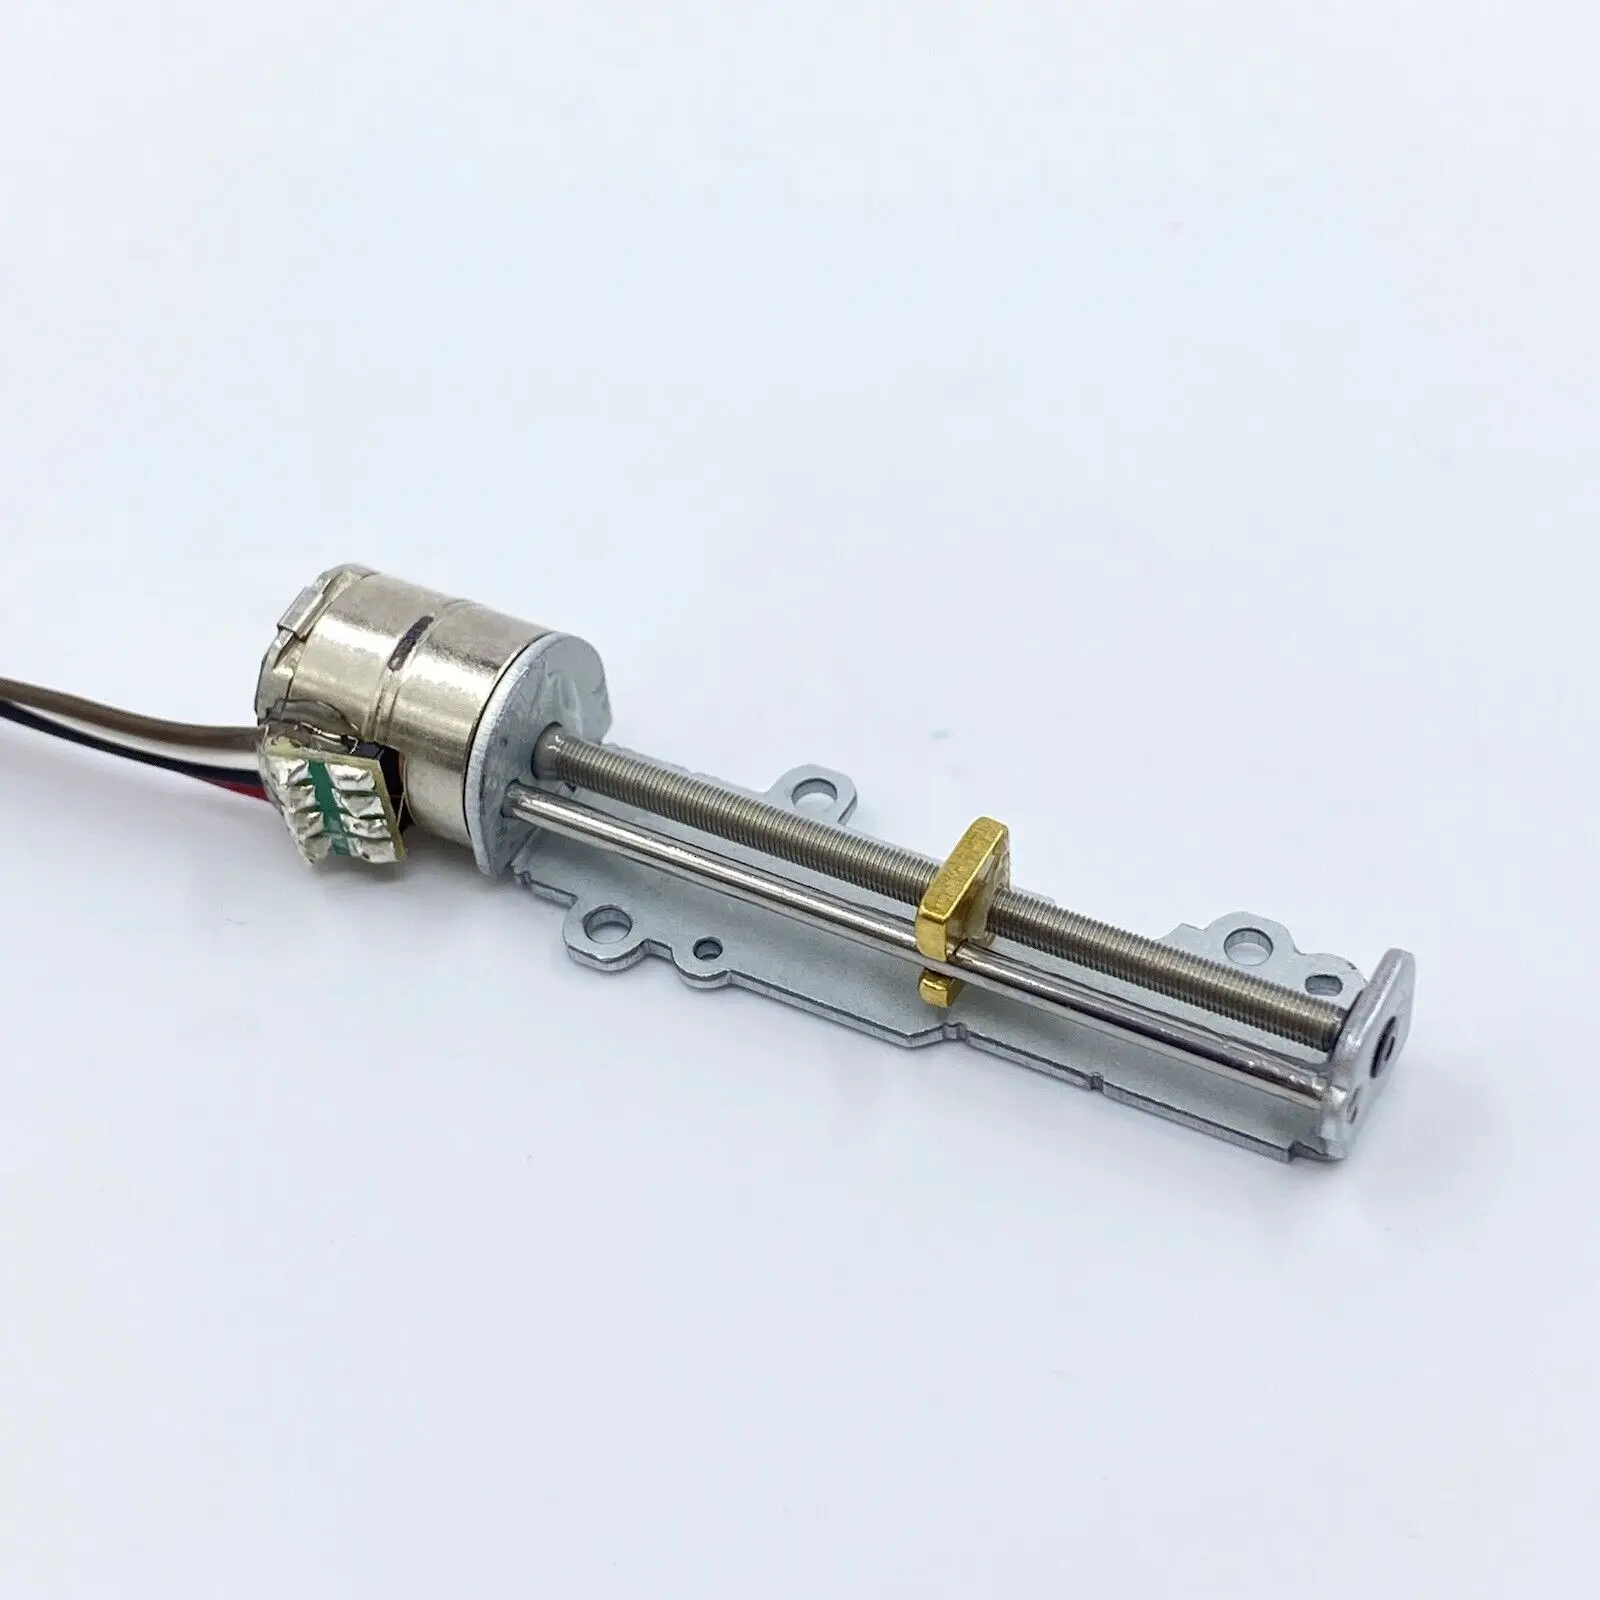 Long 90mm 2-phase 4-wire photorépéteur motor lead screw slider diy mini imprimante laser 